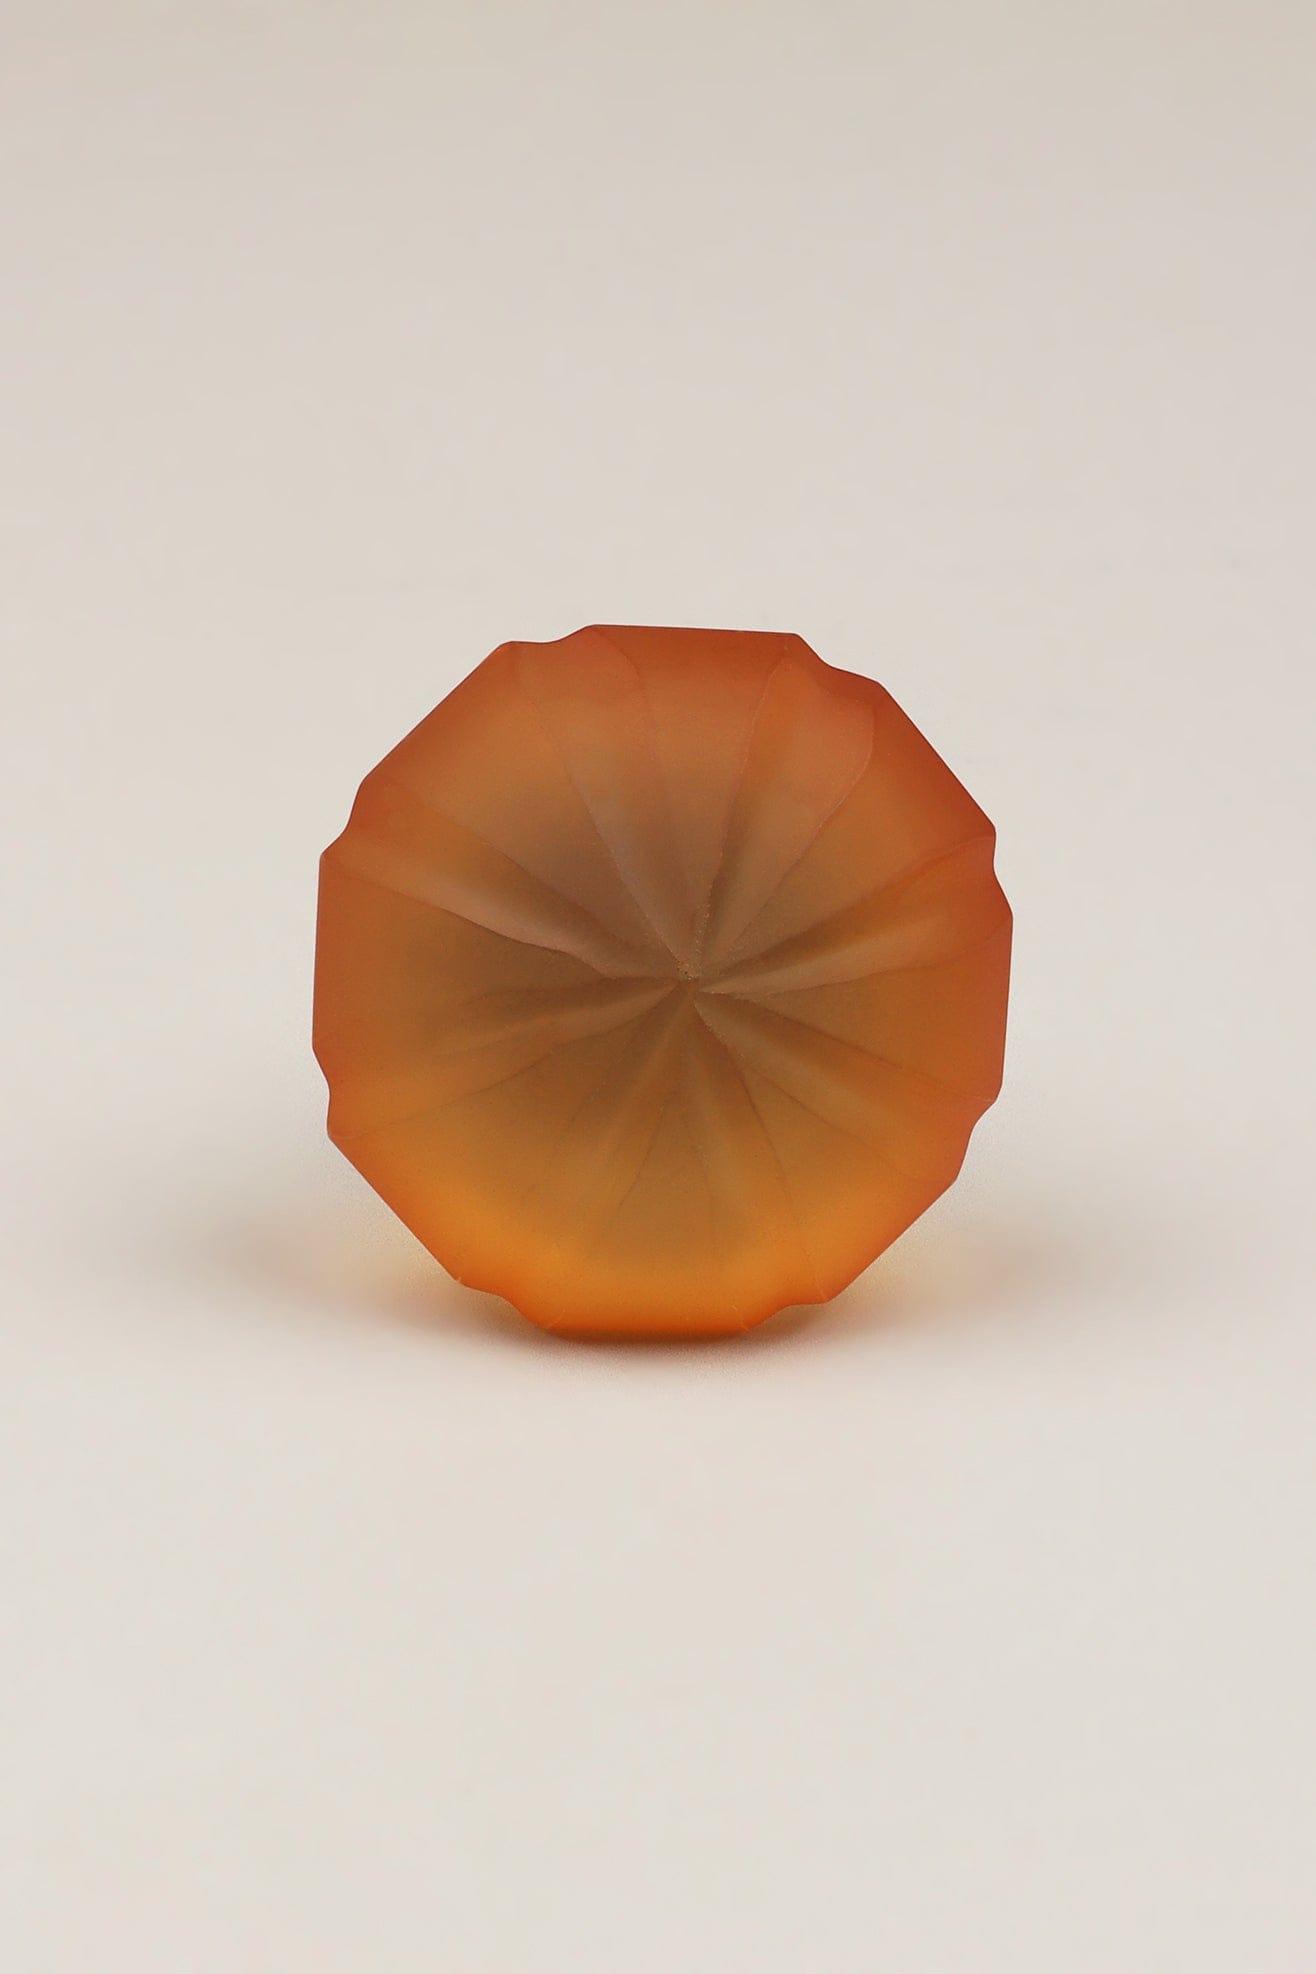 G Decor Cabinet Hardware Orange UMBRELLA STYLISH MATT GLASS KNOBS